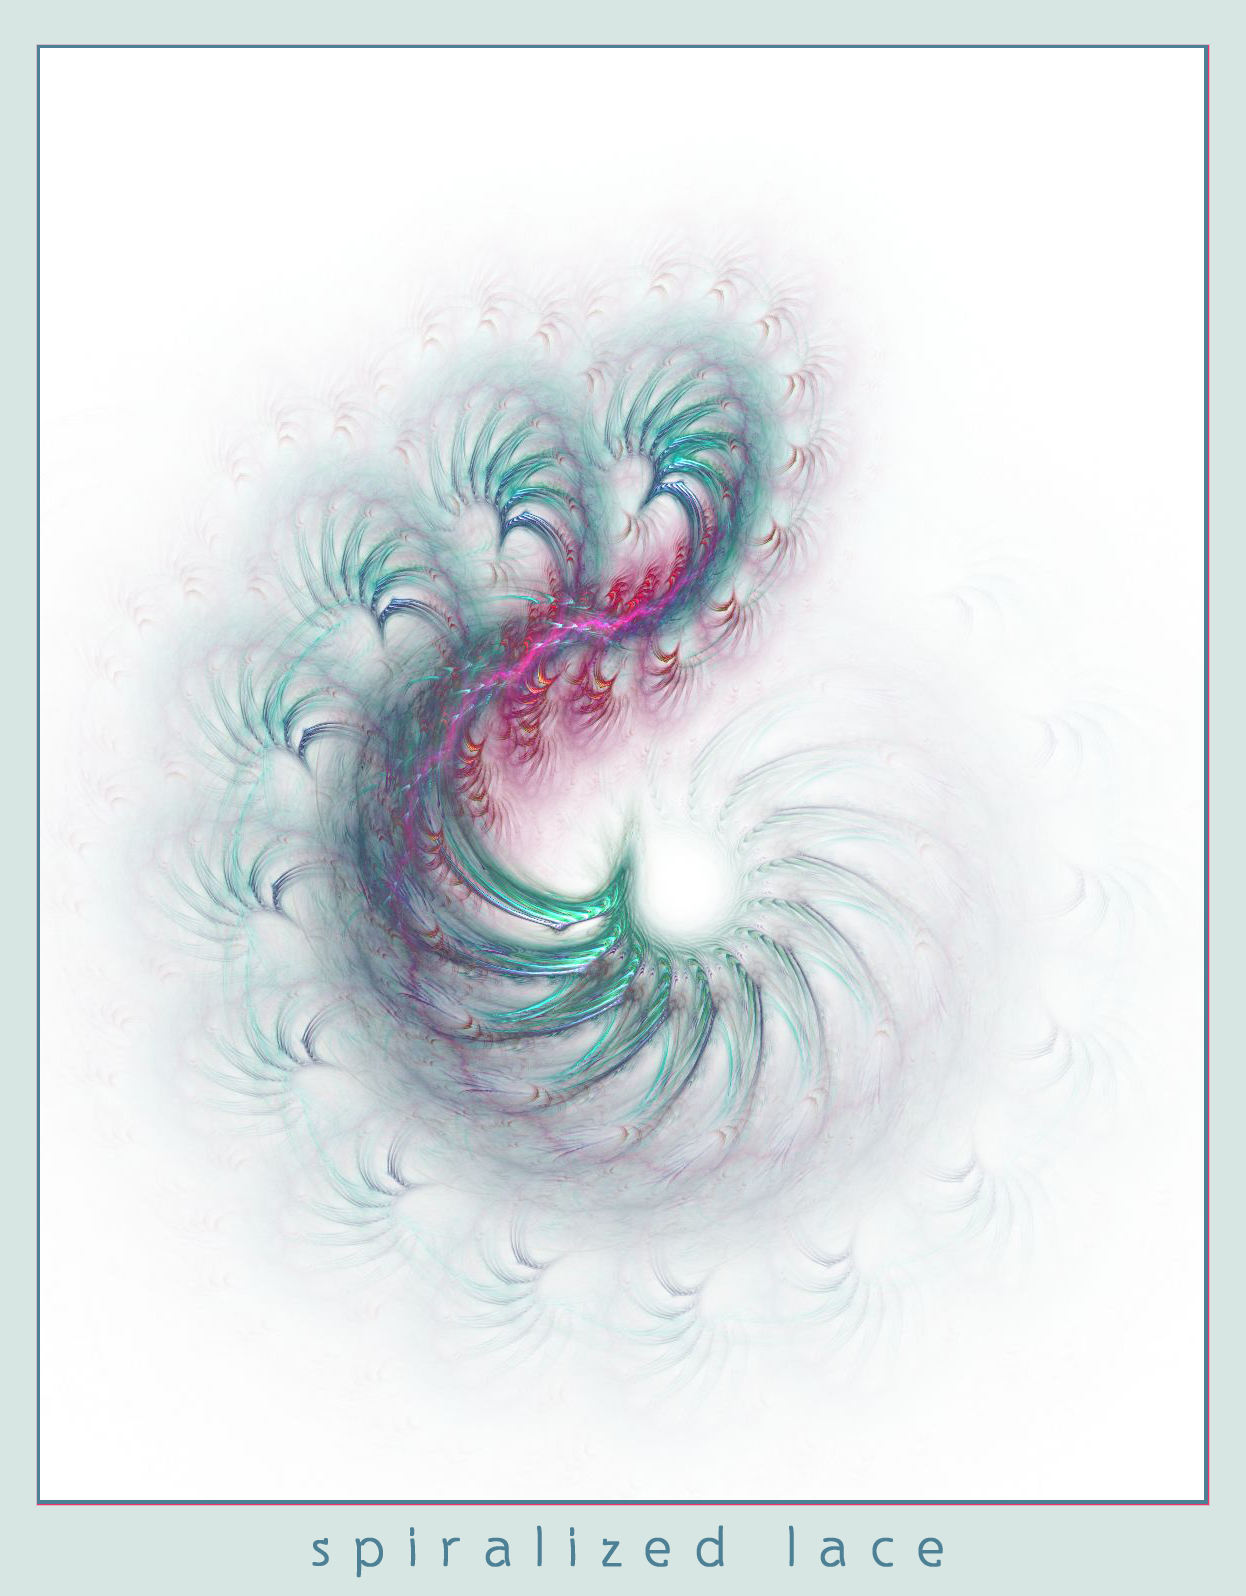 Spiralized Lace